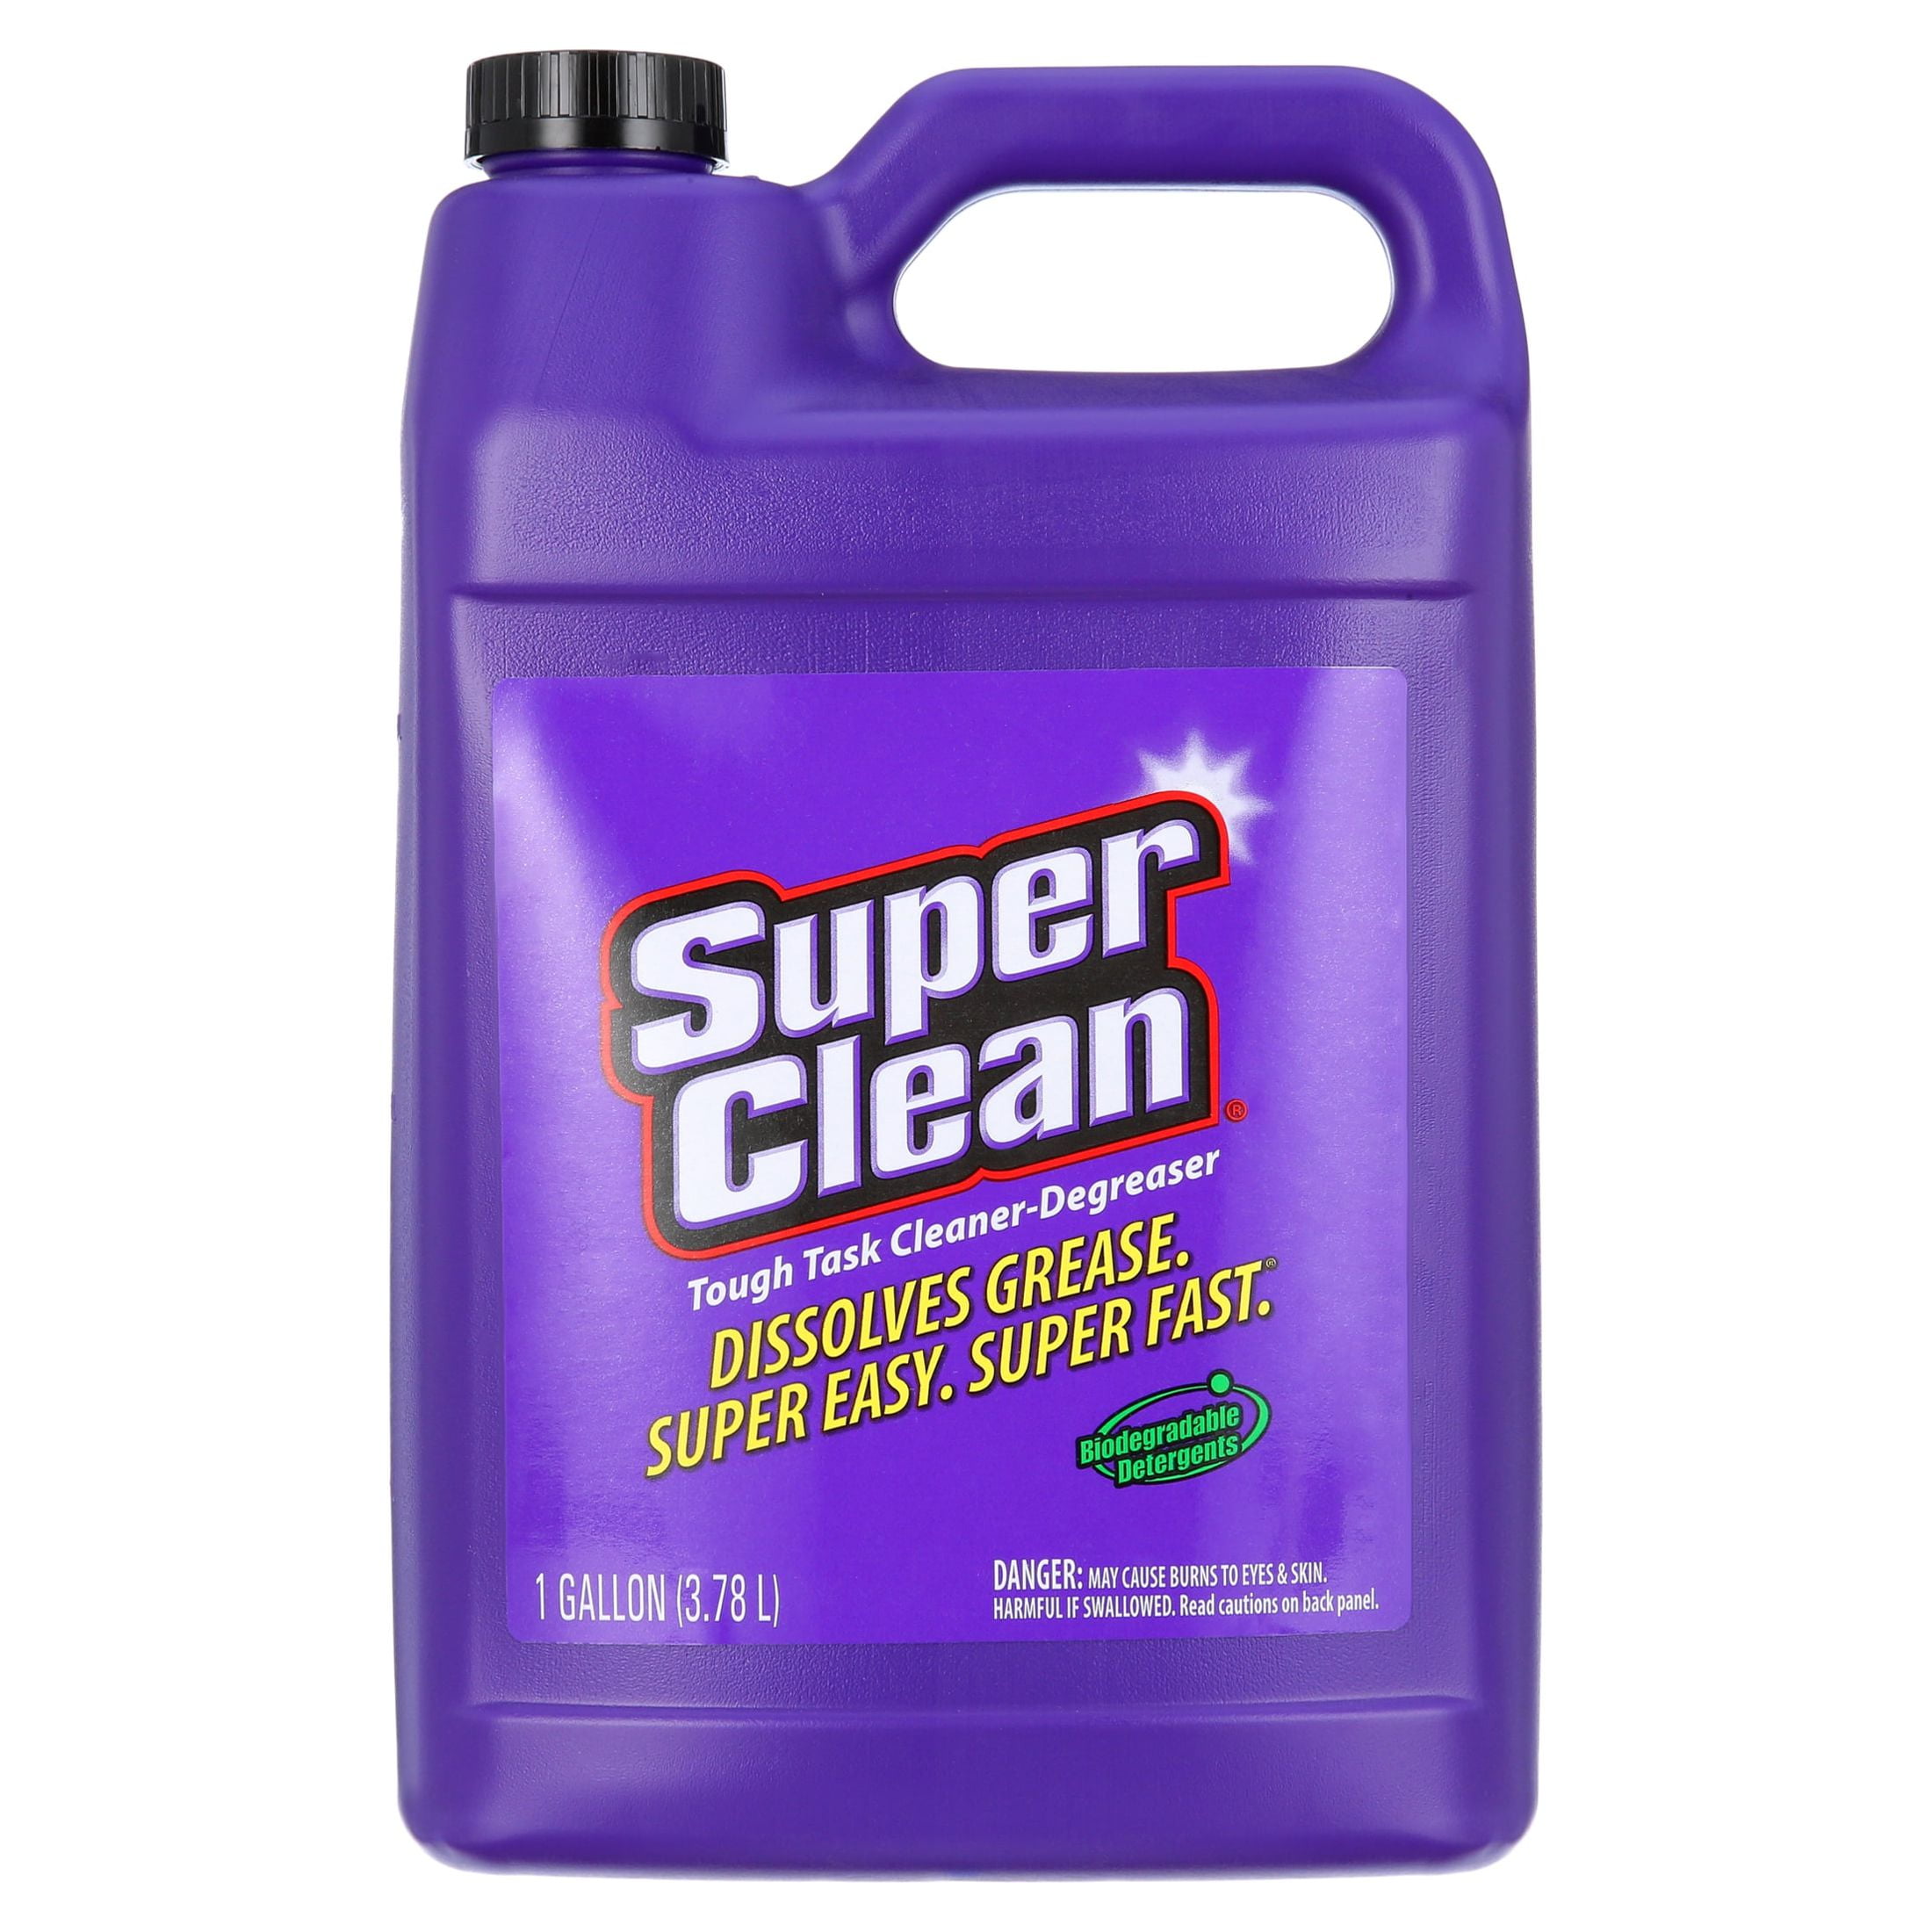 Super Clean Tough Task Degreaser, 320 Fluid Ounce